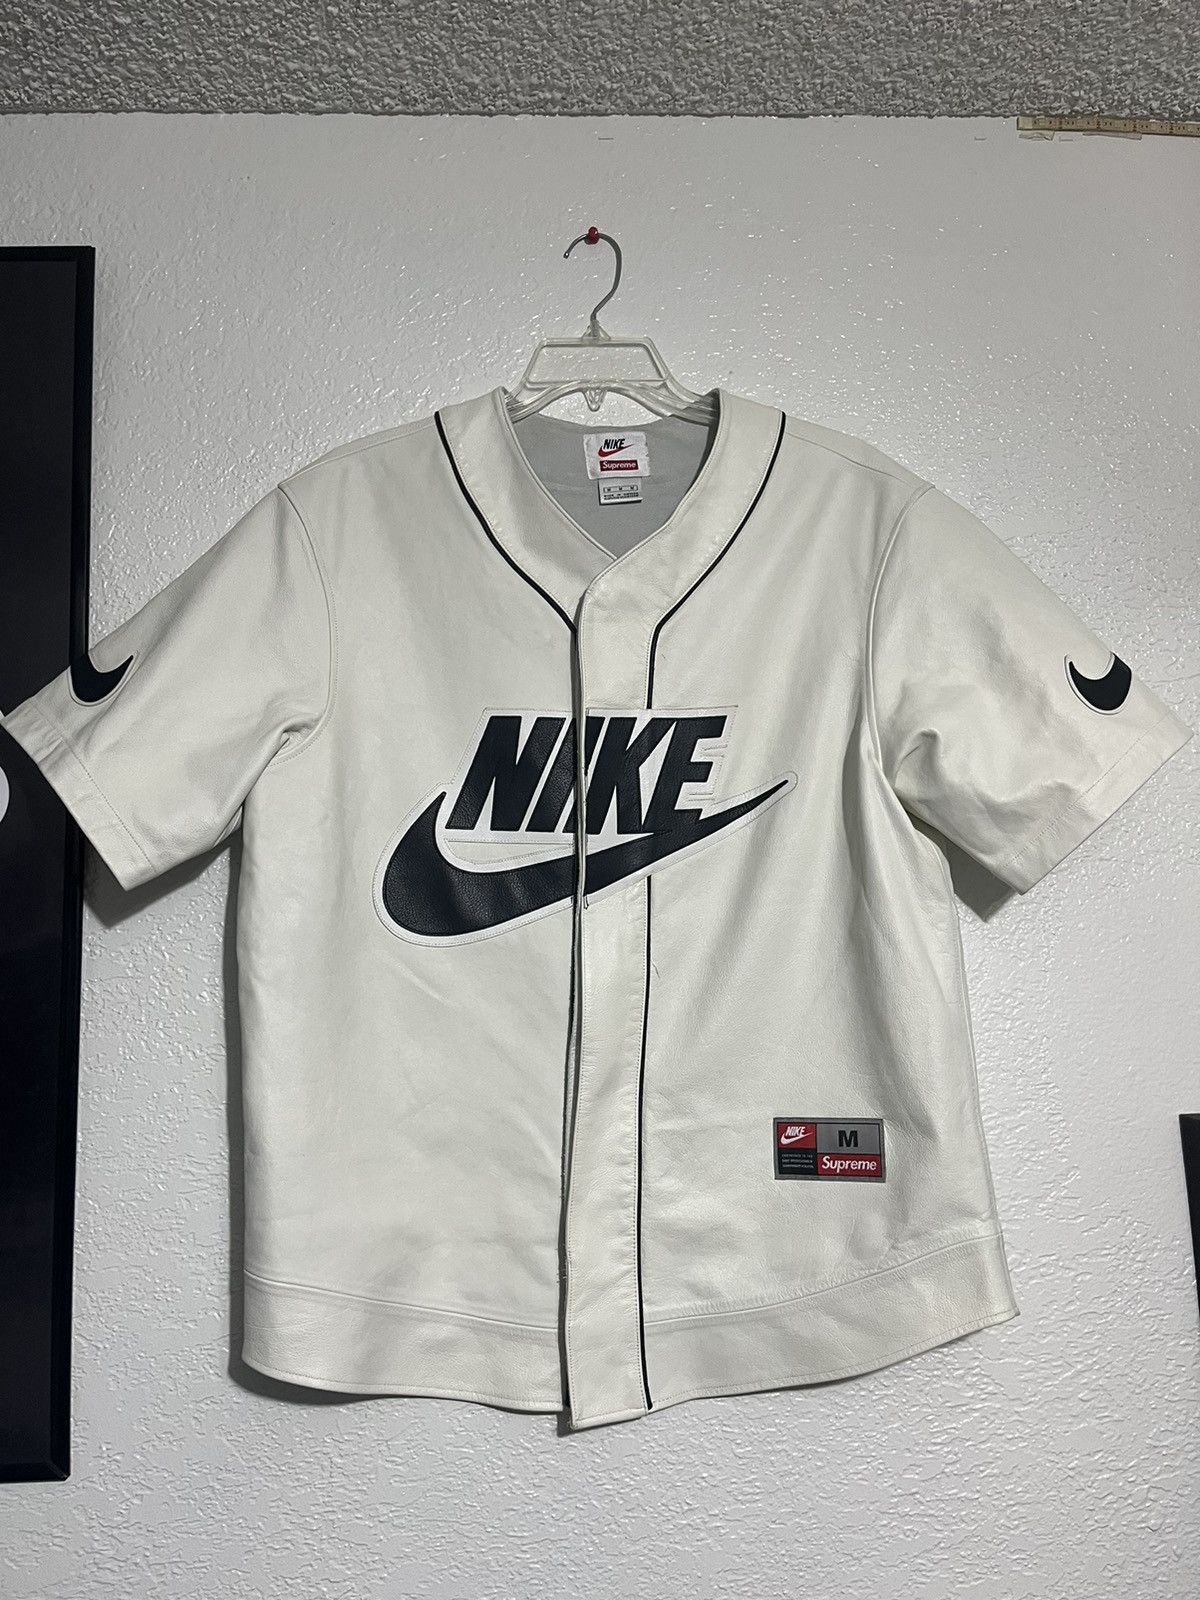 Supreme Supreme x Nike Leather Baseball Jersey | Grailed